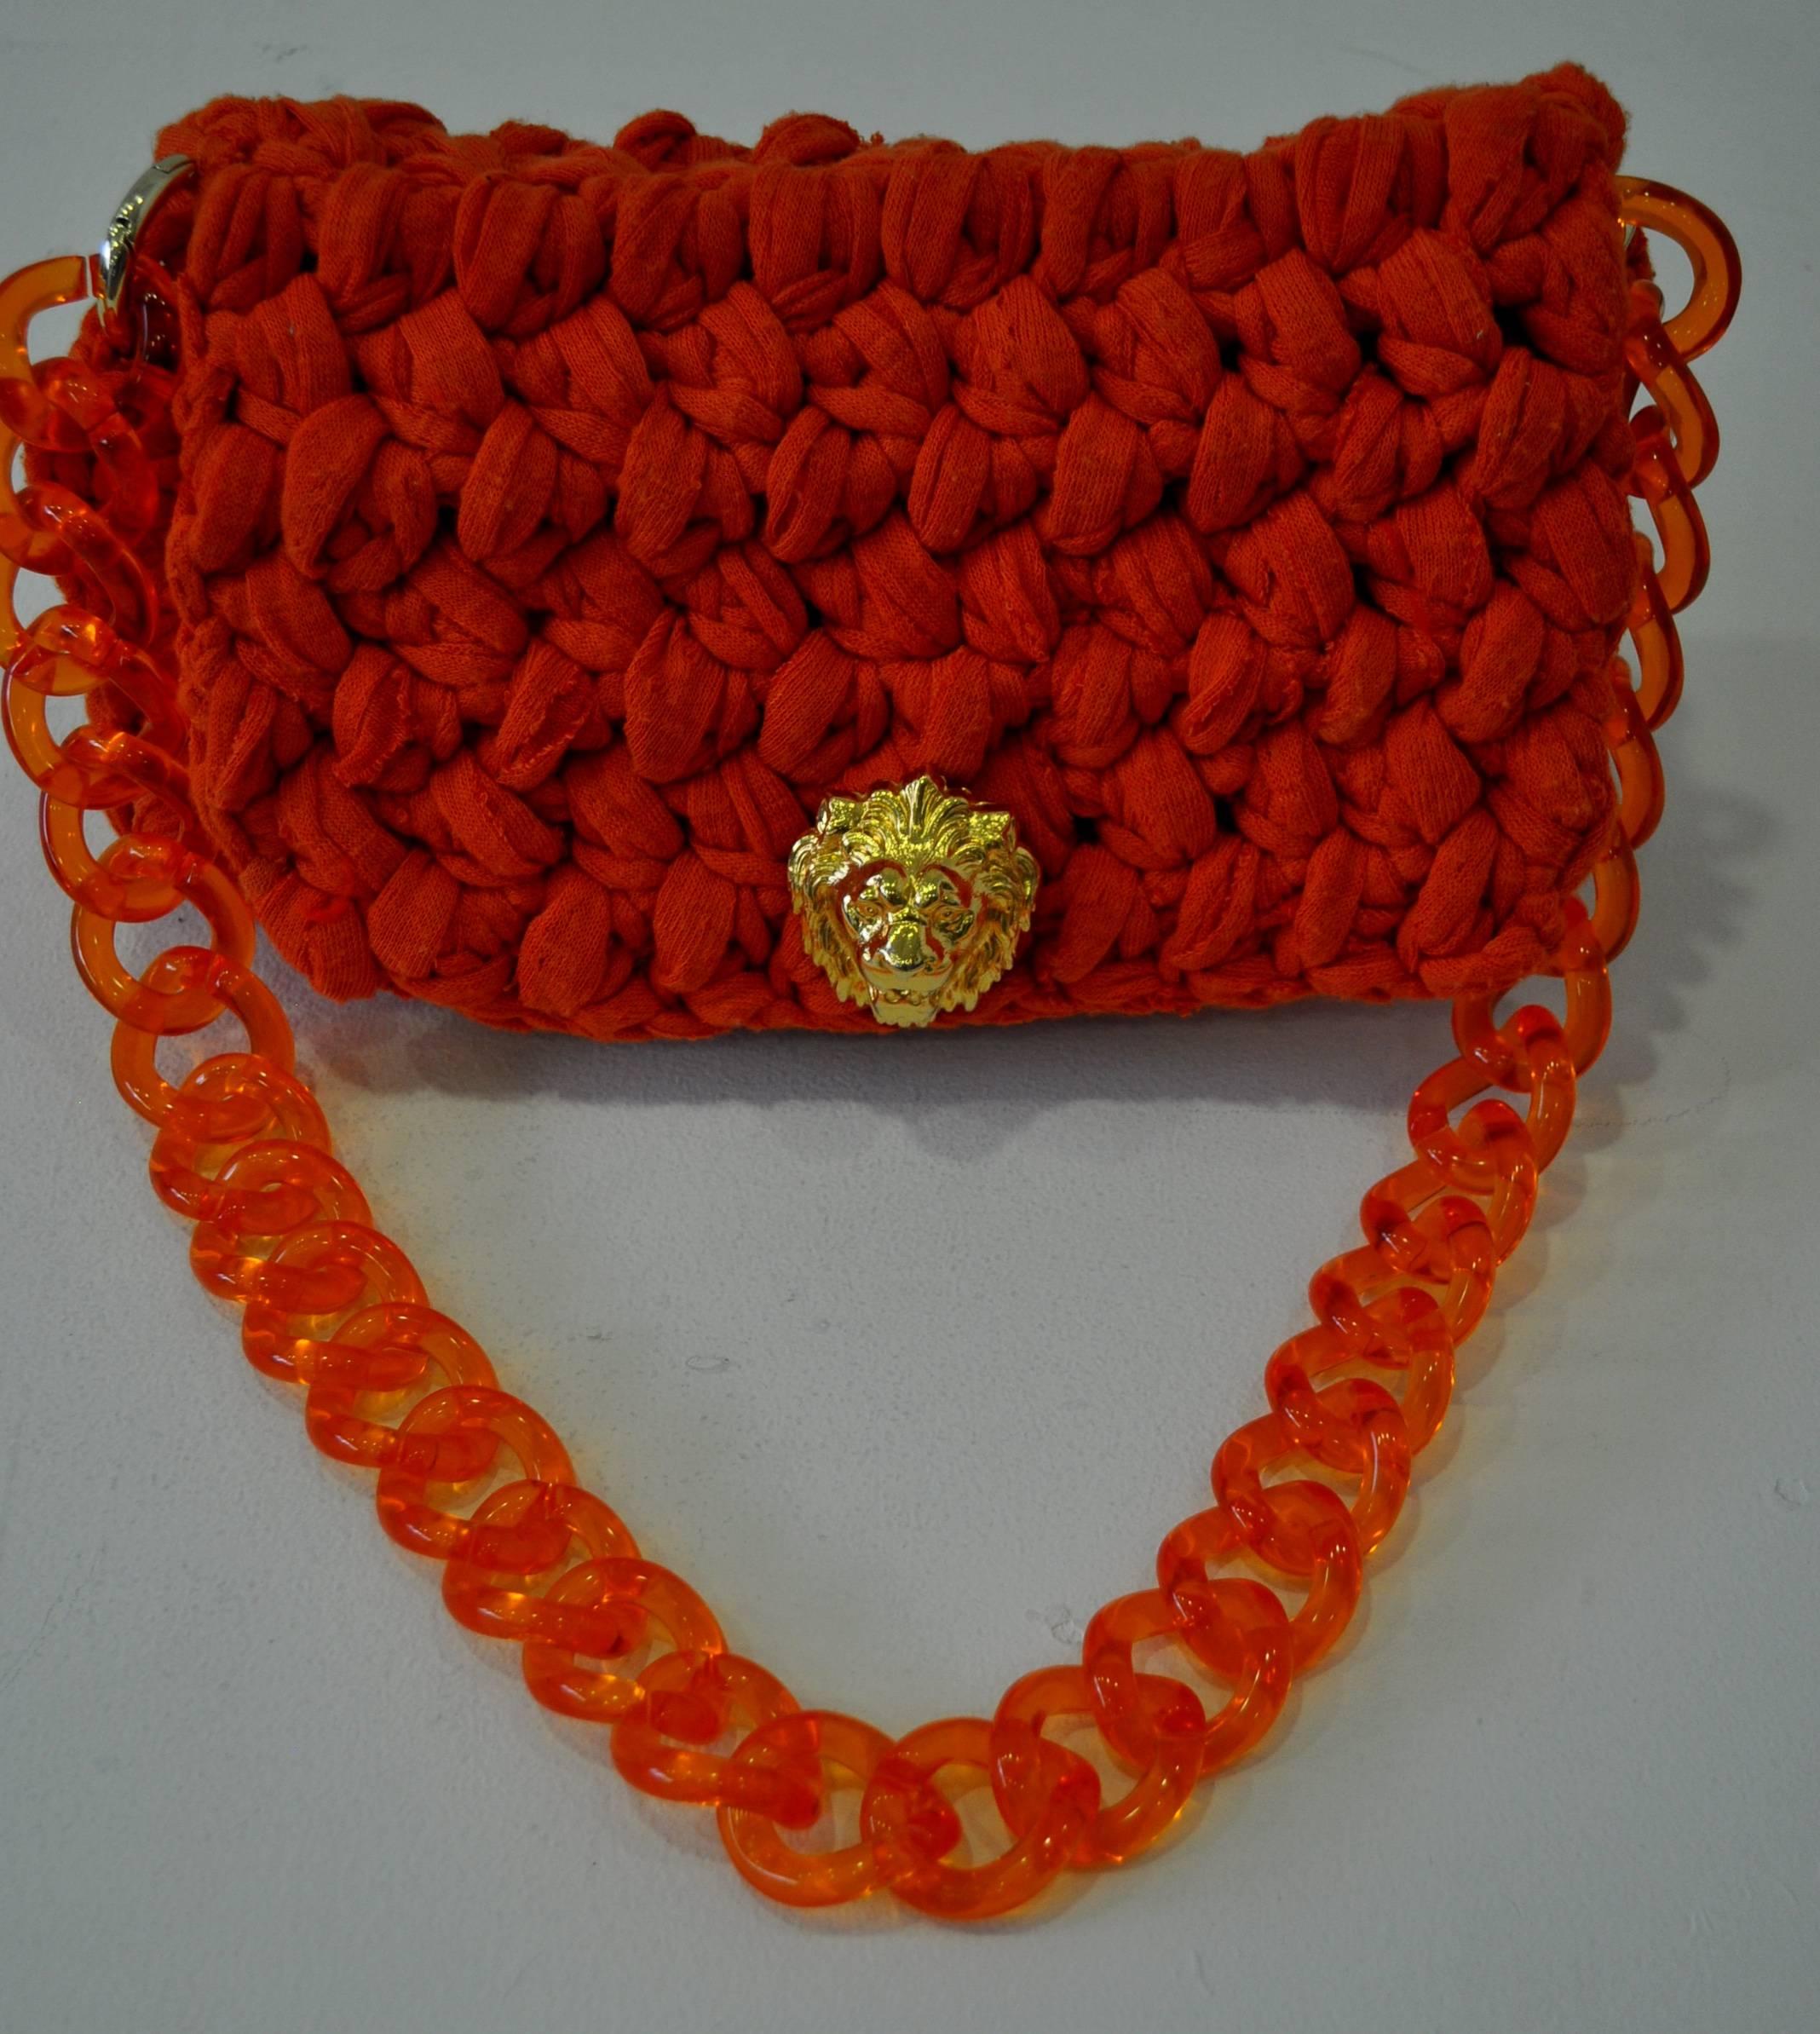 Fresh Fait Maison Designer Inspired Hand Crocheted Handbag Featuring Lion Hardware Motif